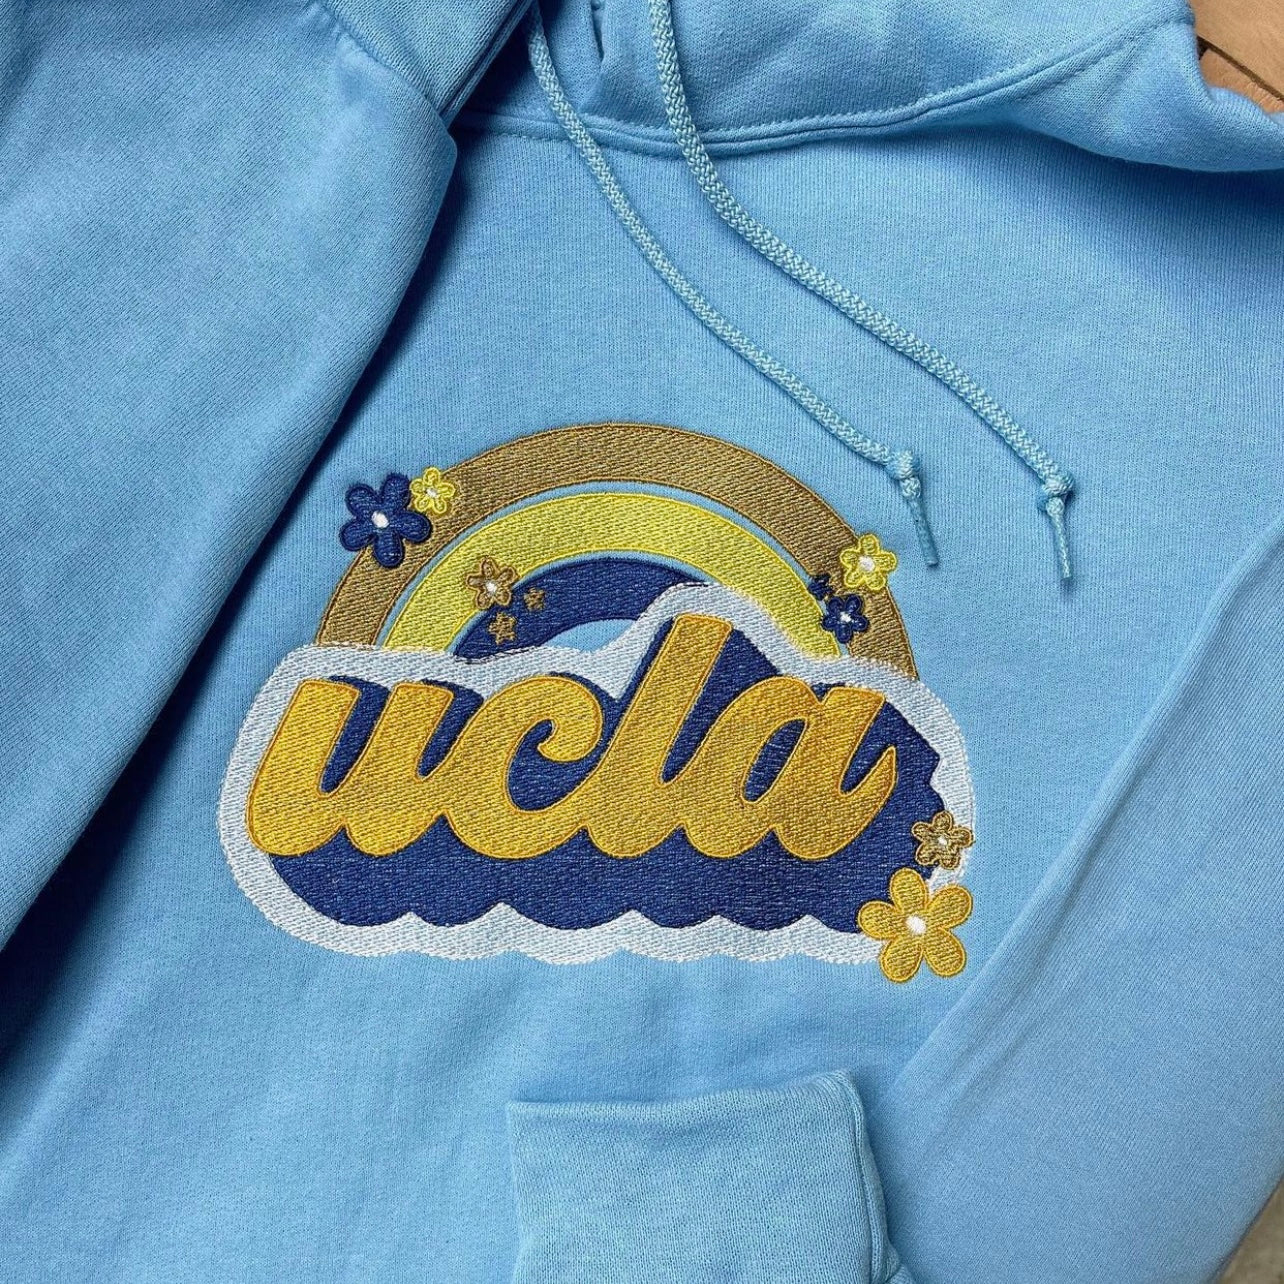 Vintage UCLA Hoodie (S) – Retro and Groovy